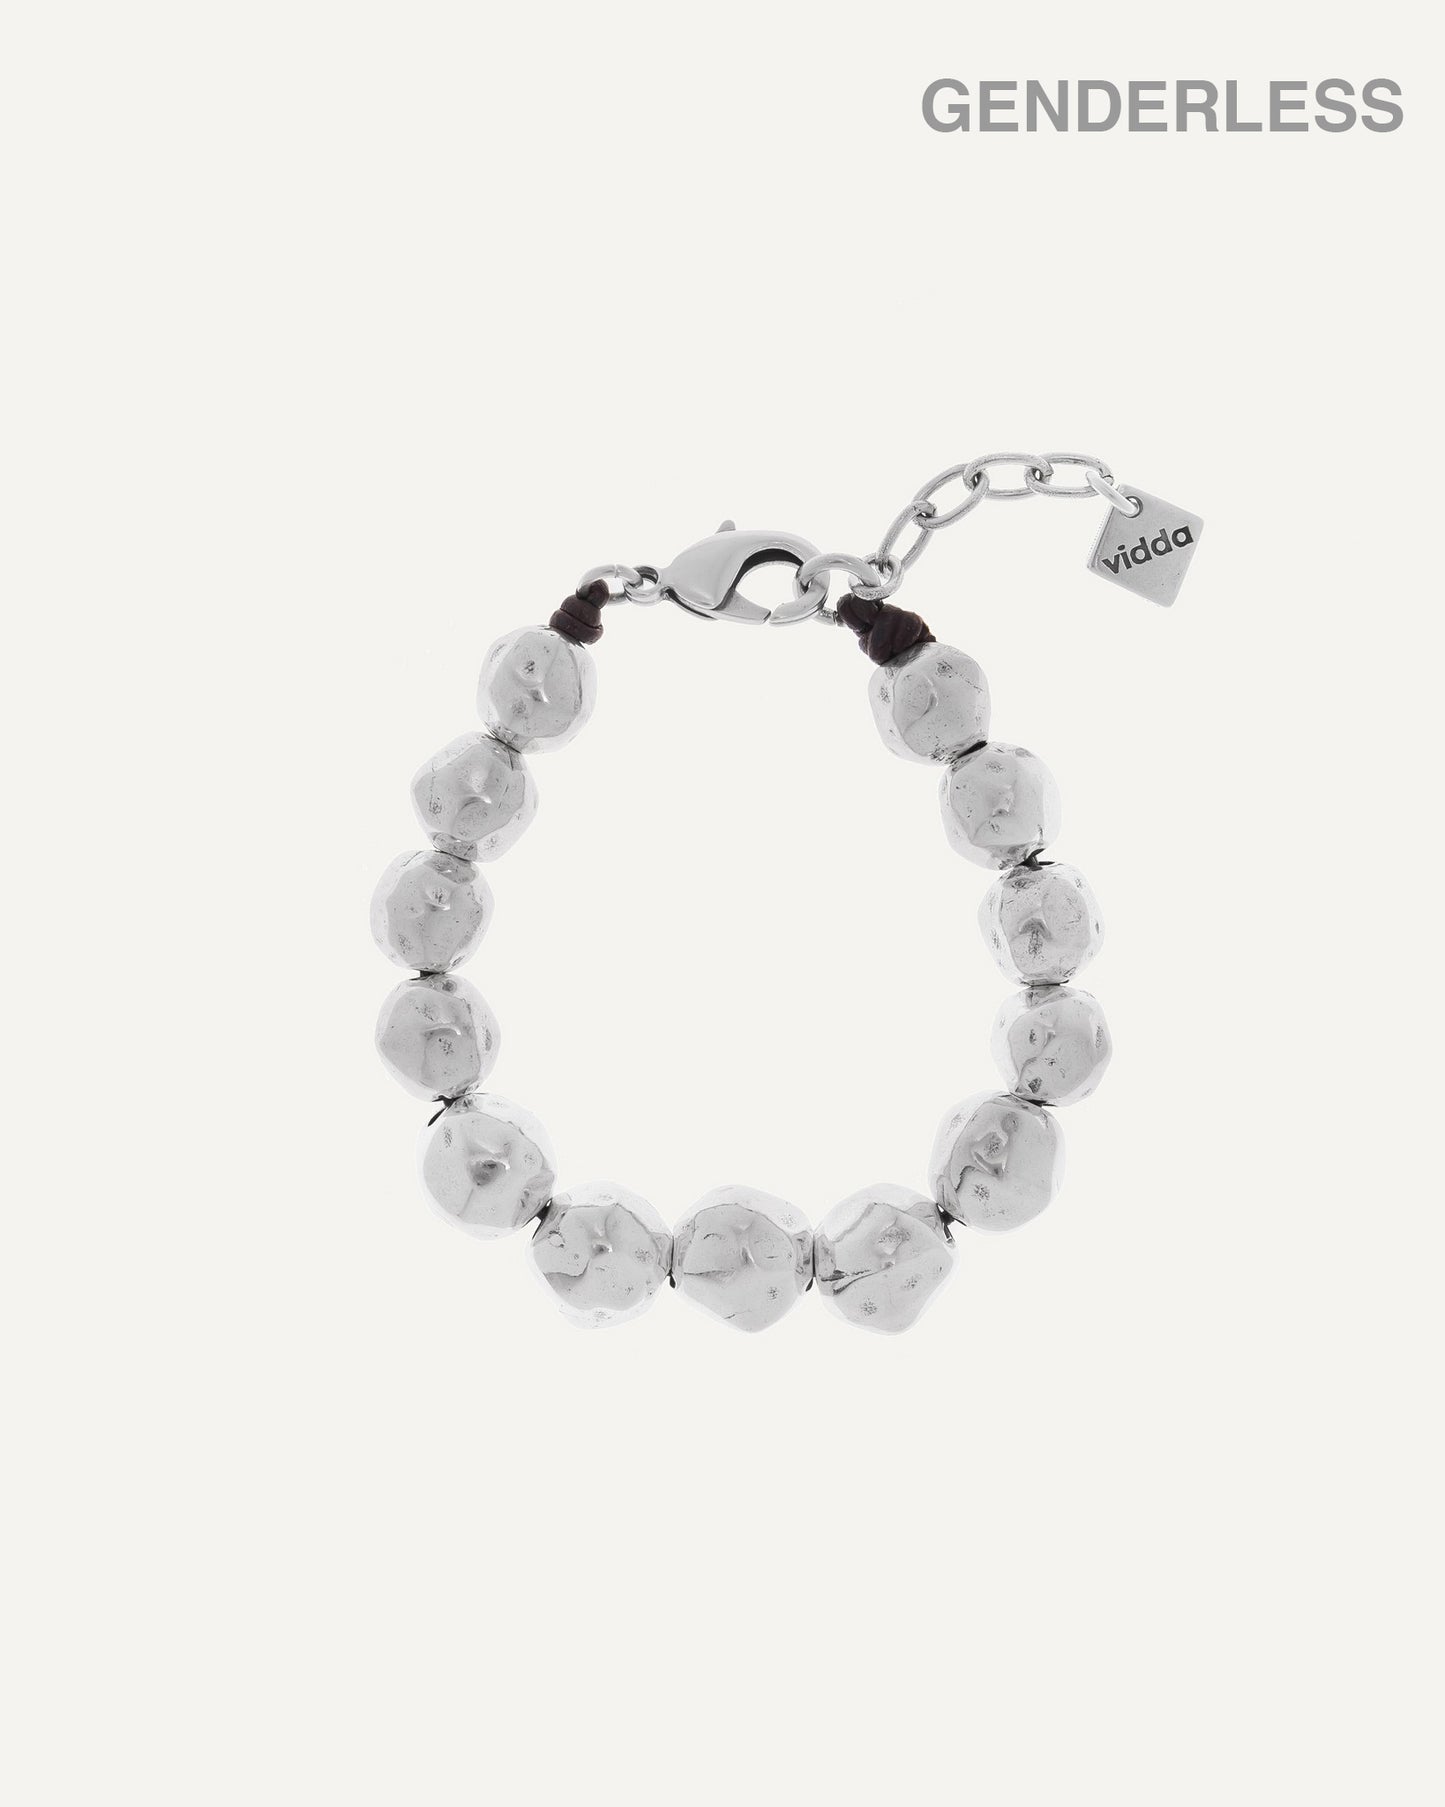 Think Silver Bracelet by Vidda Jewelry